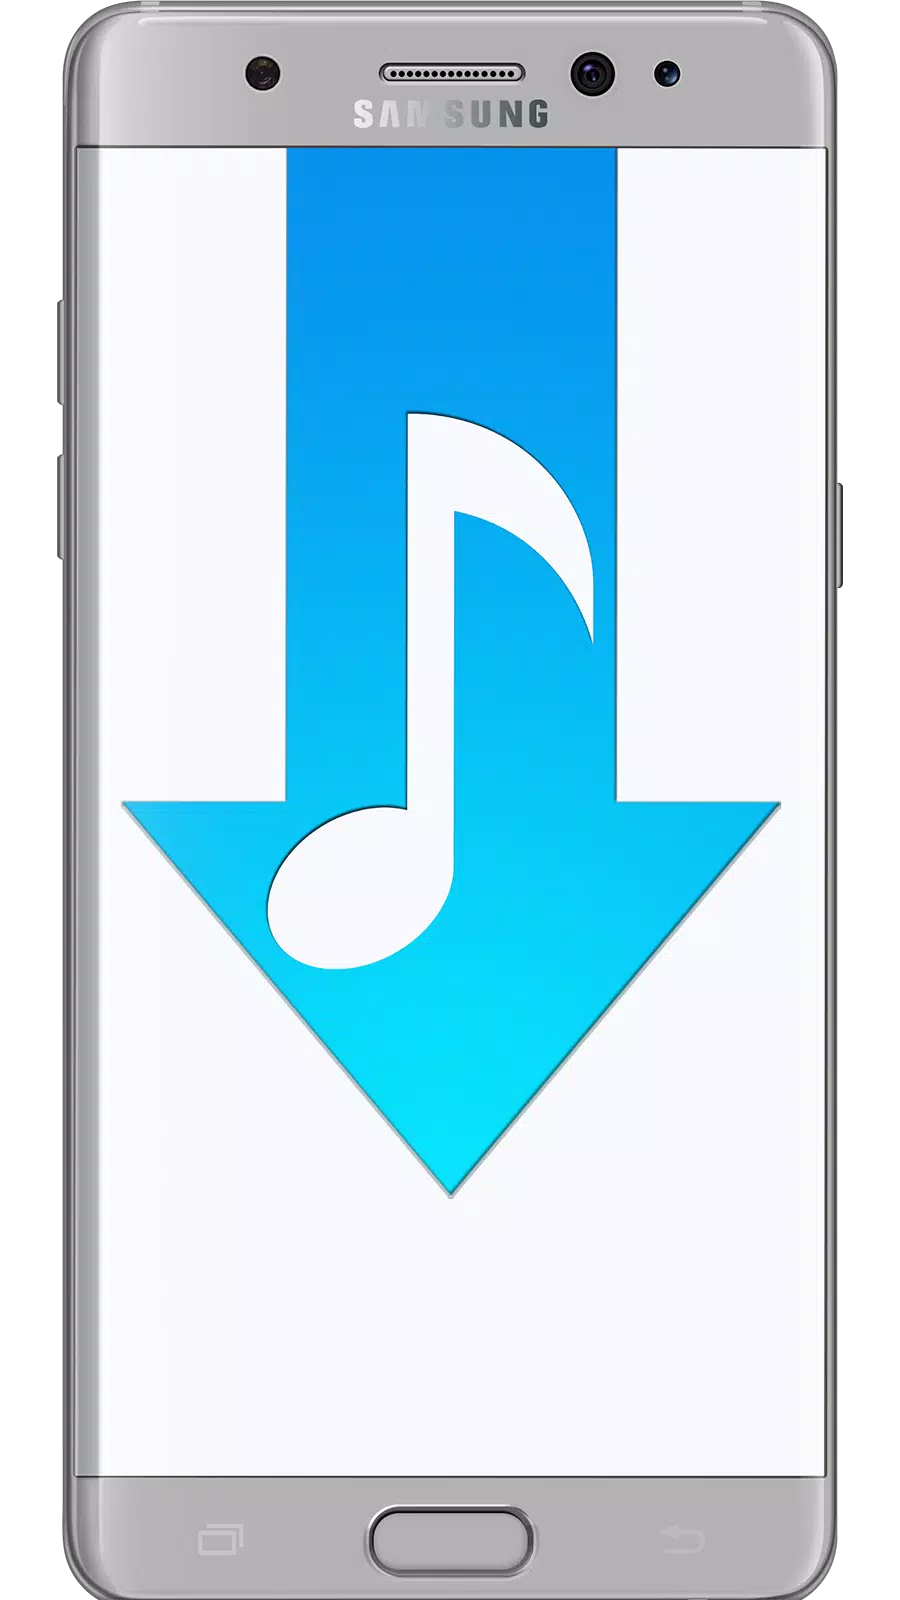 Bedava Müzik İndir | Klip MP3 İndir APK for Android Download